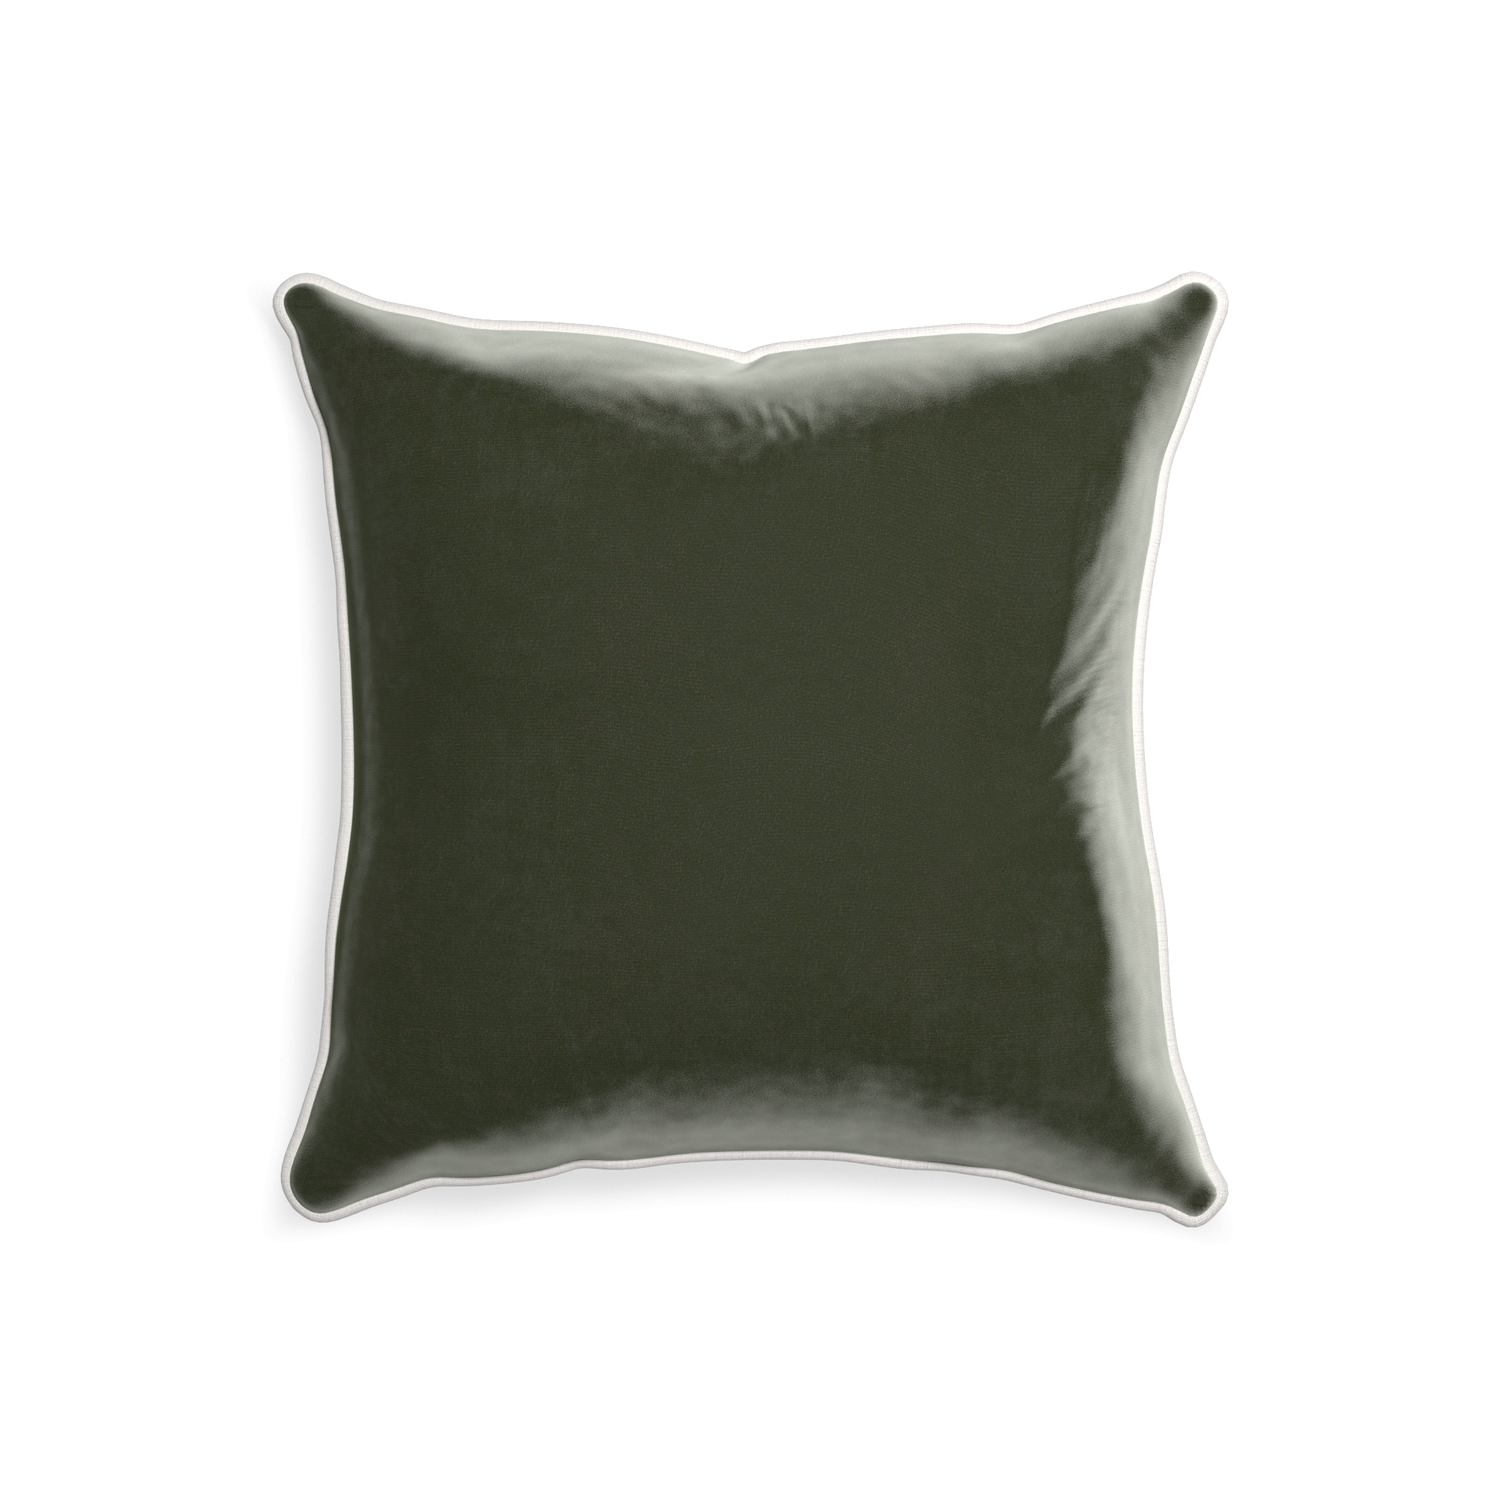 square fern green velvet pillow with white piping